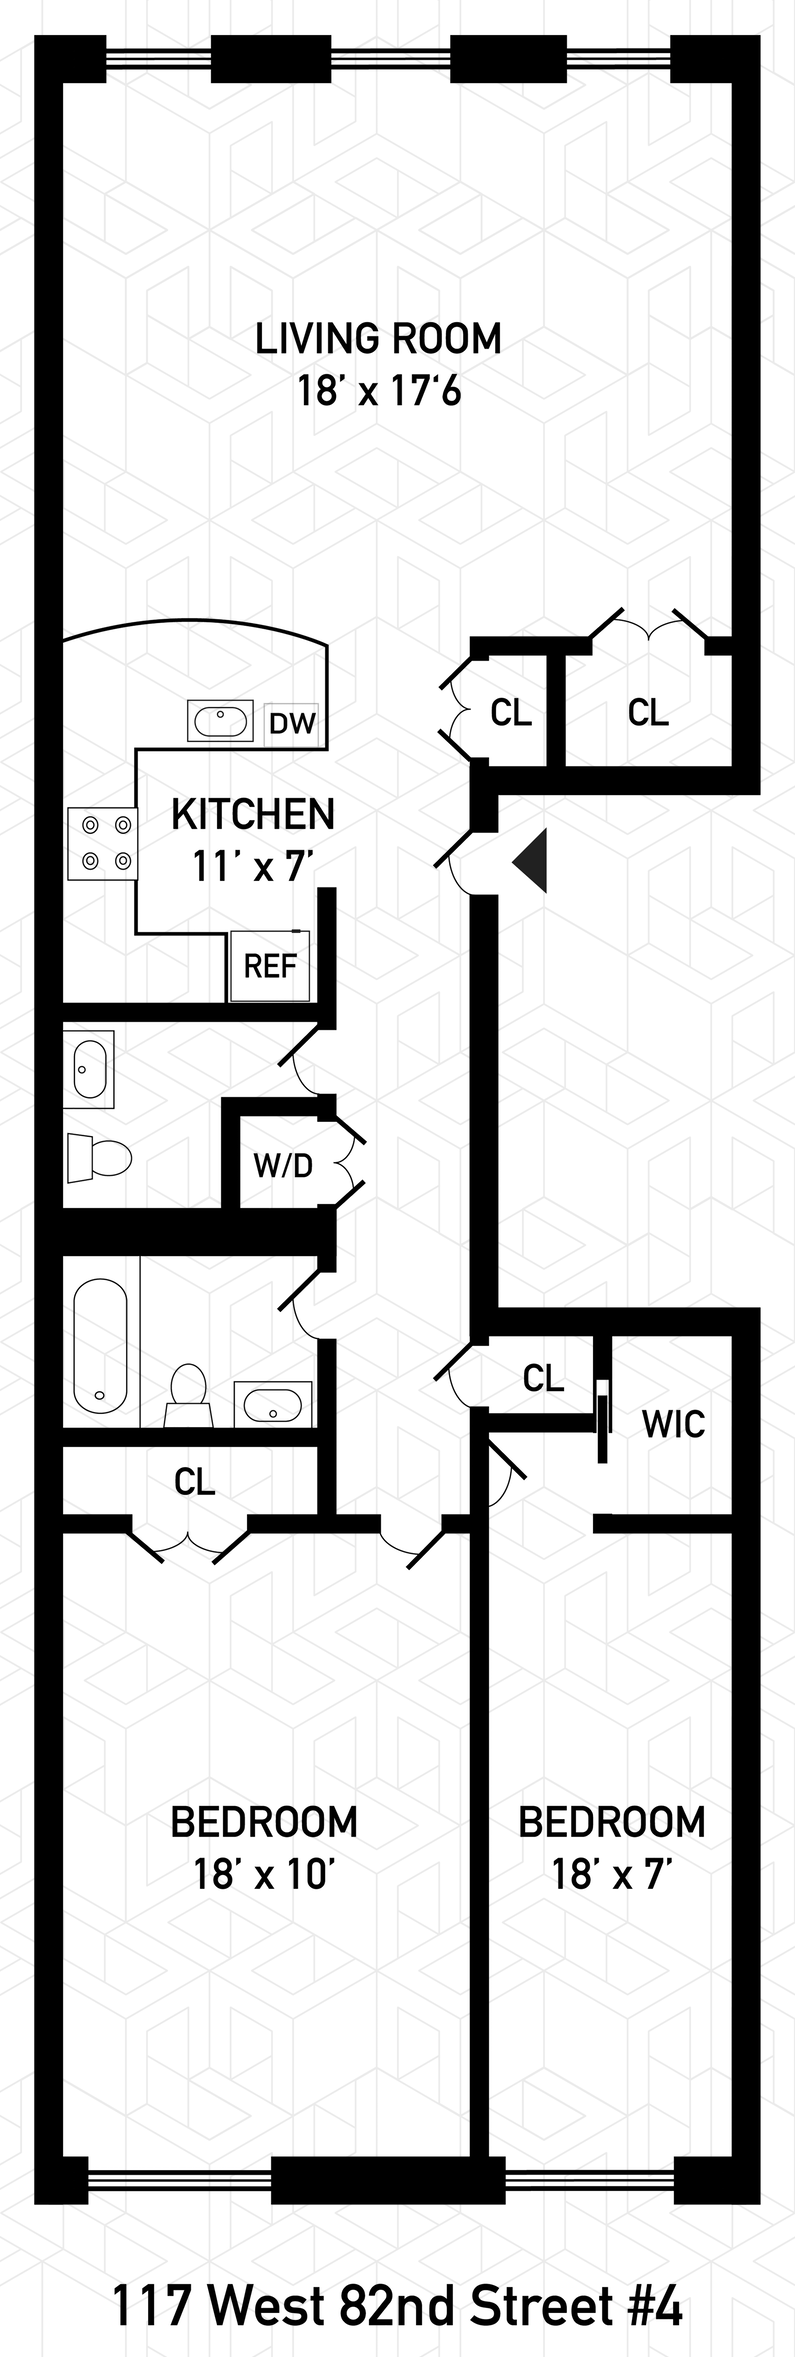 Floorplan for 117 West 82nd Street, 4